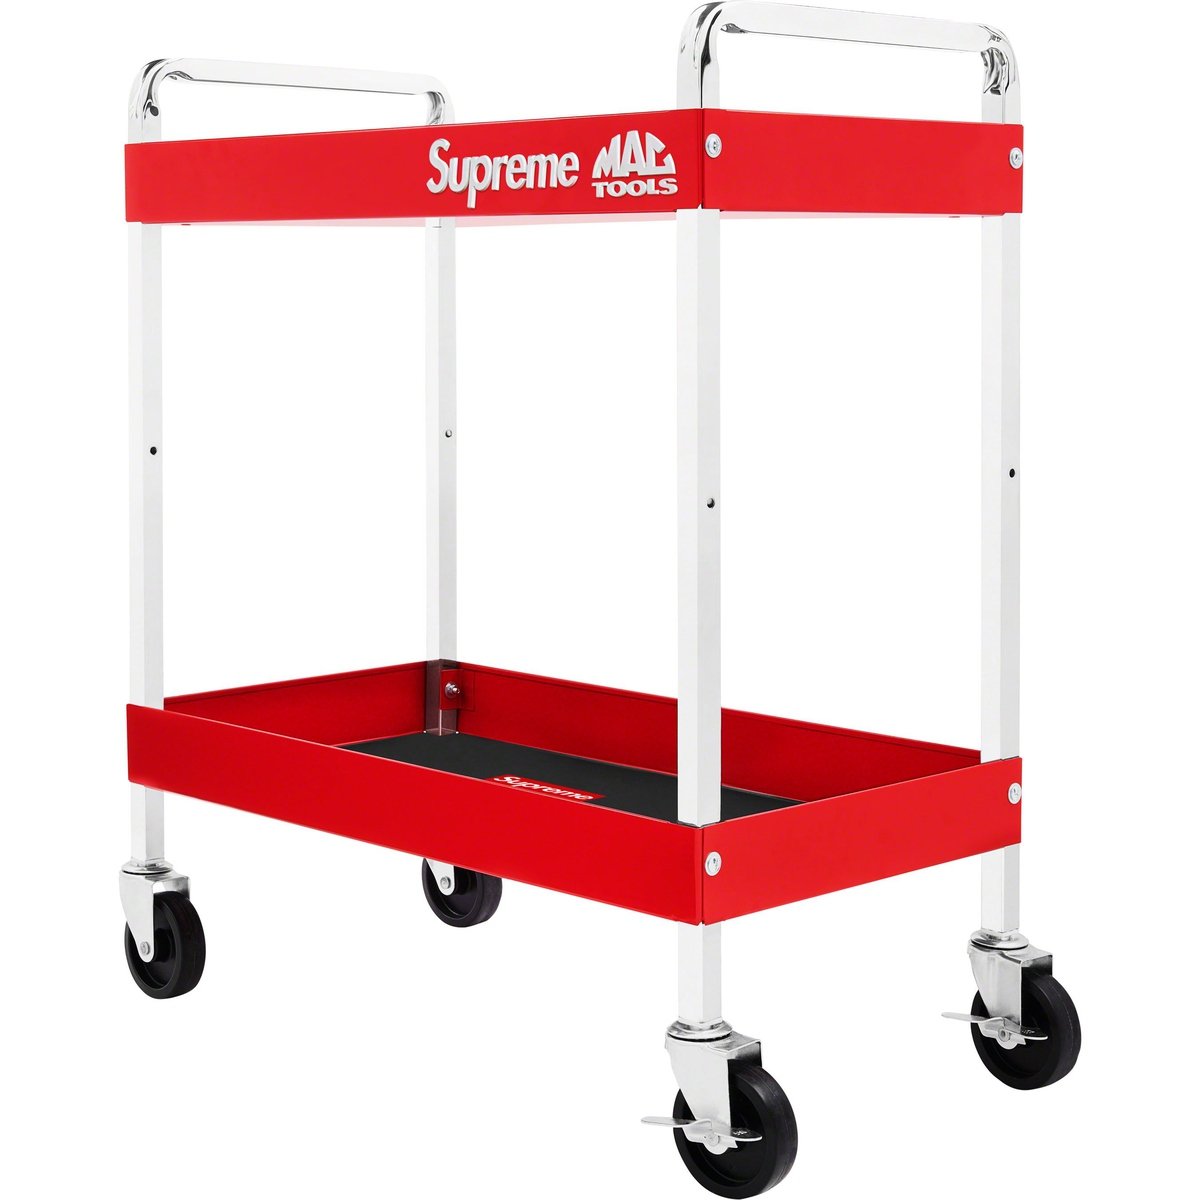 Supreme Supreme Mac Tools Utility Cart released during spring summer 24 season